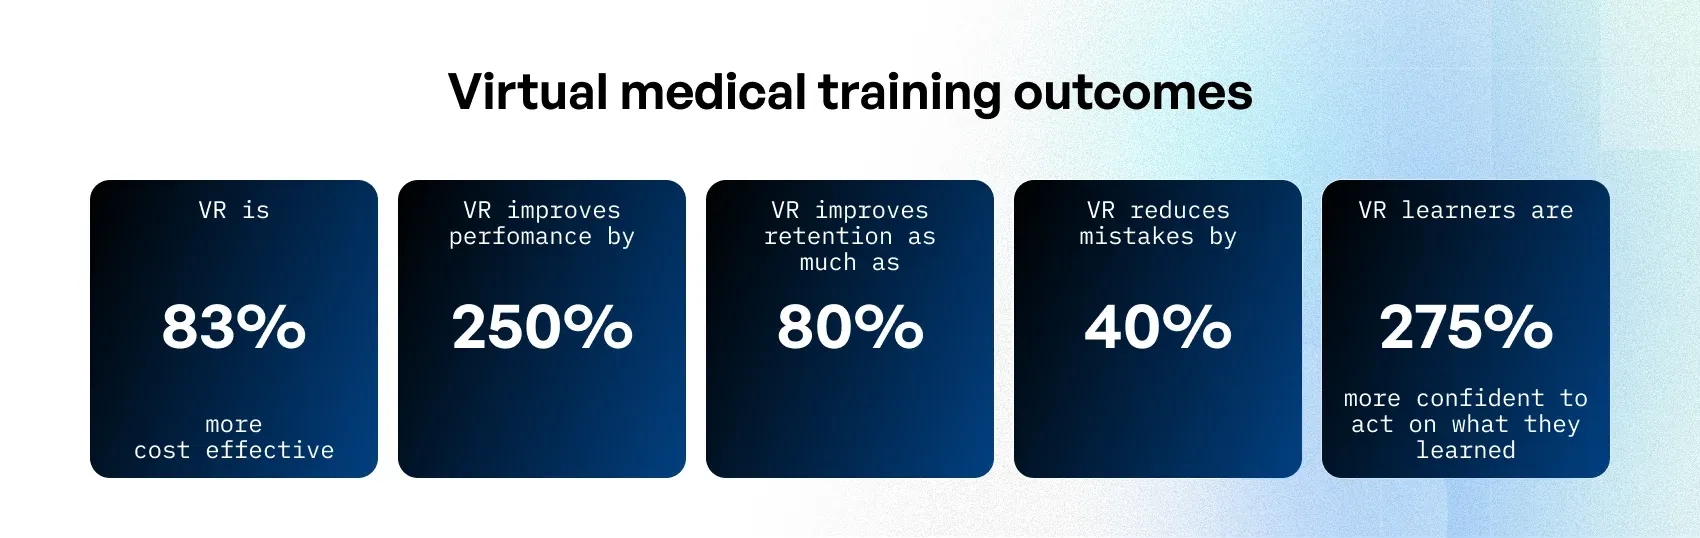 VR in health education